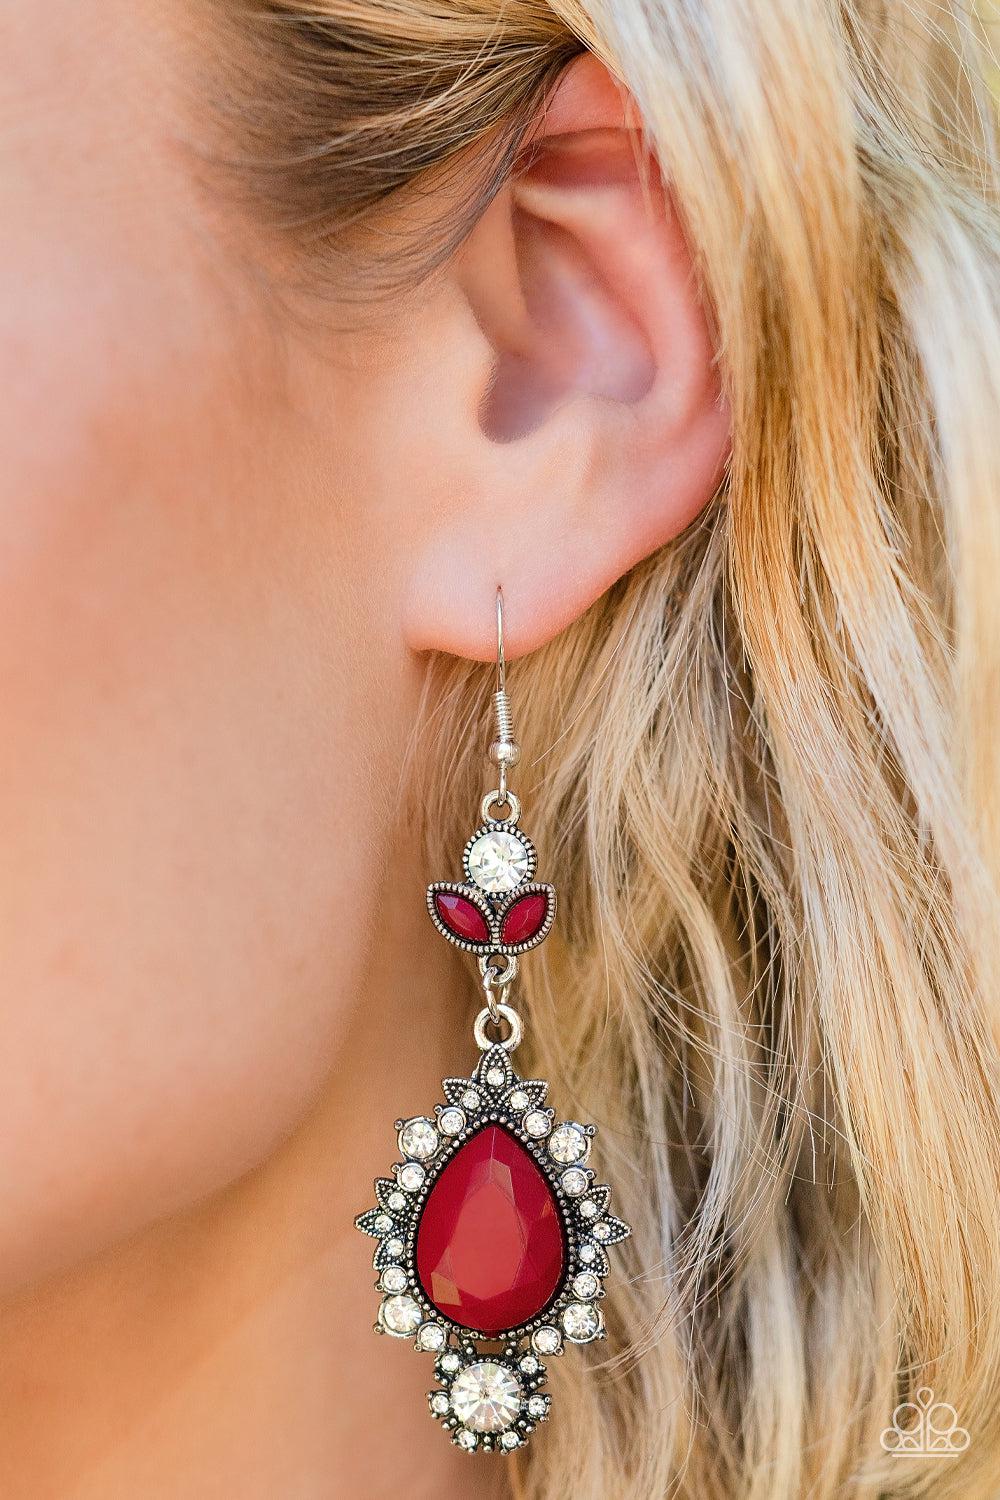 SELFIE-Esteem Red Earrings - Paparazzi Accessories-on model - CarasShop.com - $5 Jewelry by Cara Jewels